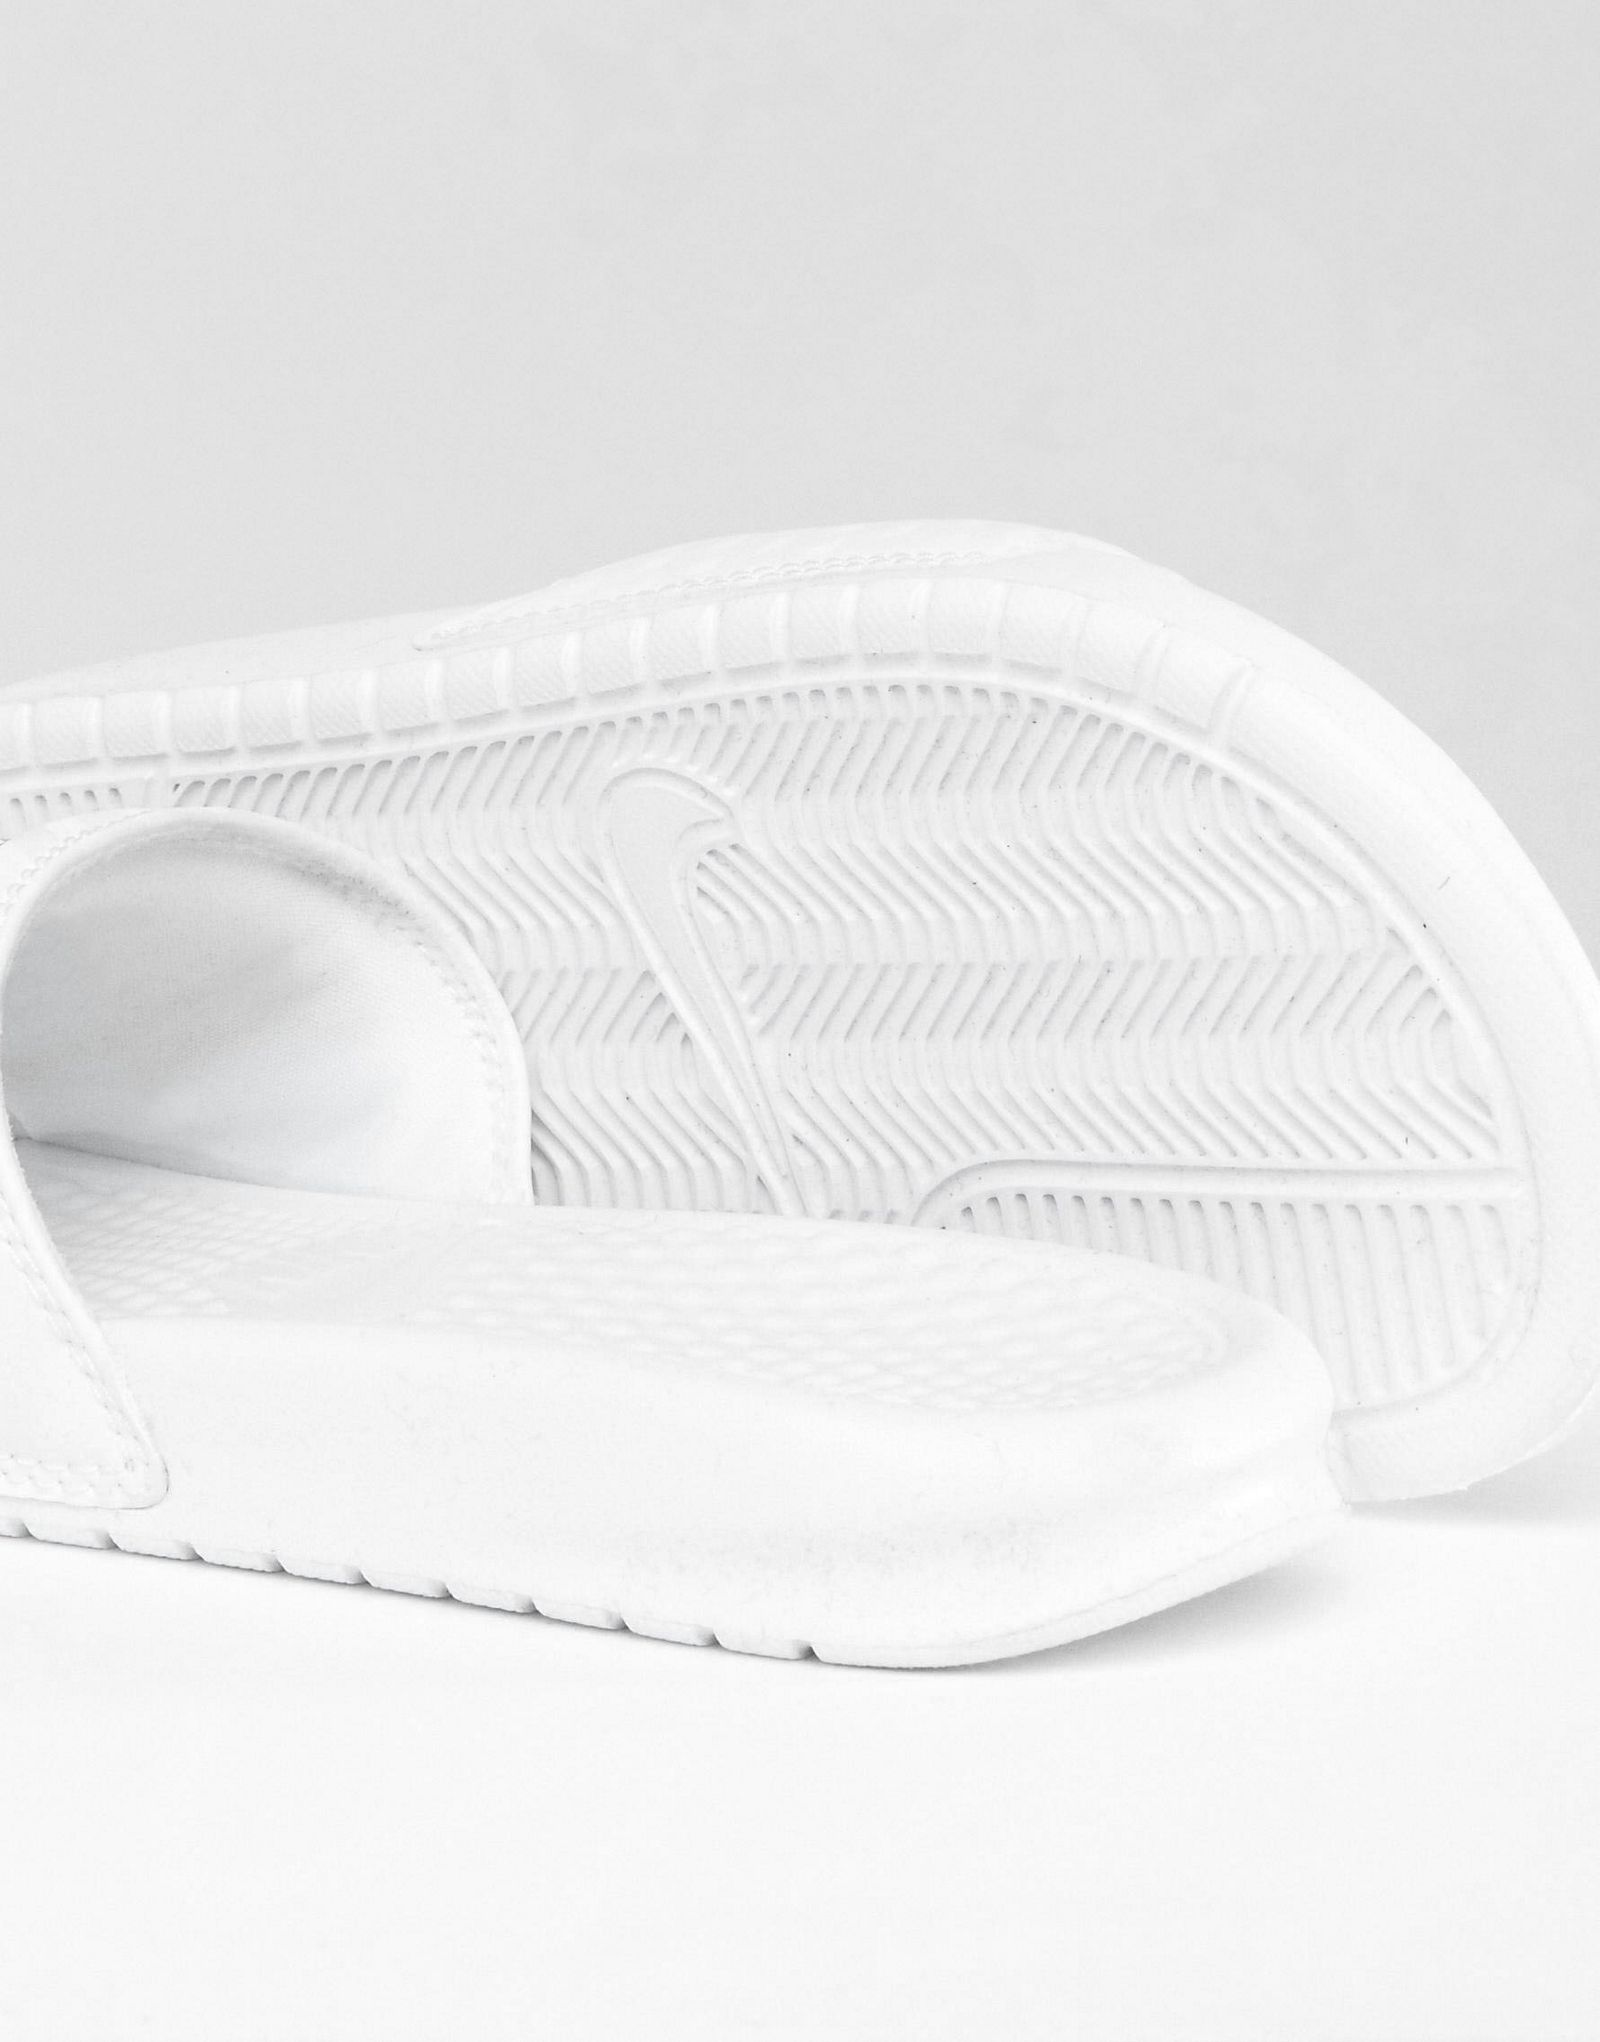 Nike Benassi Logo Sliders In White